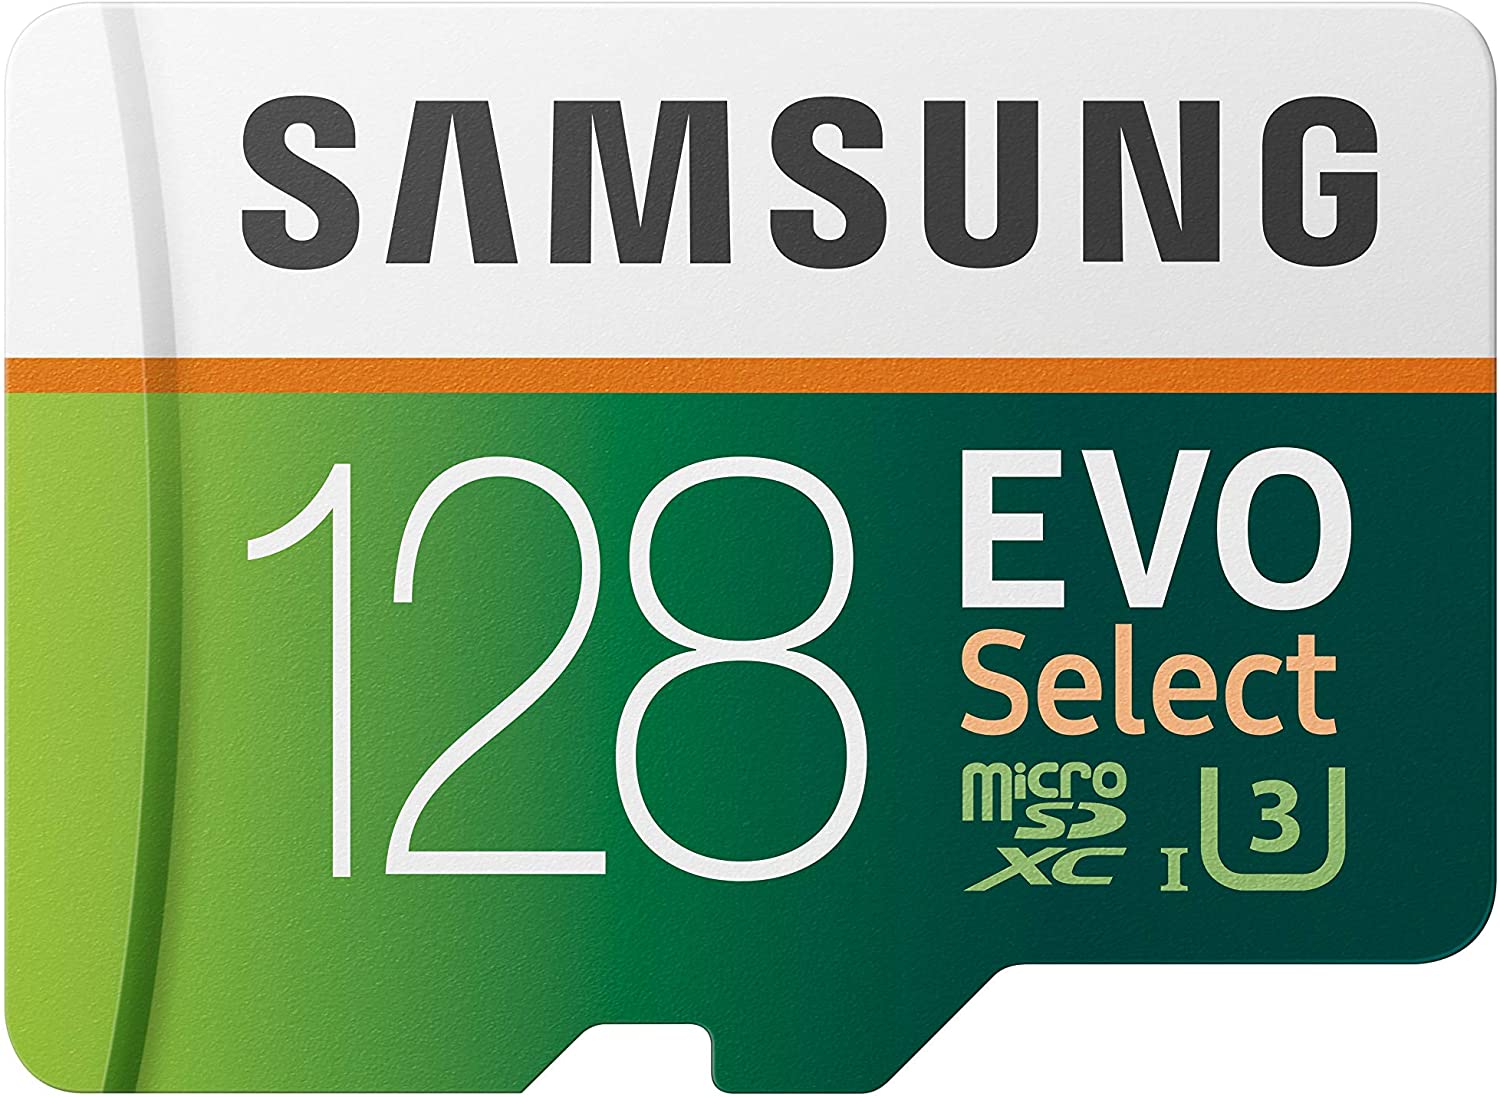 Samsung Evo Select Render Cropped